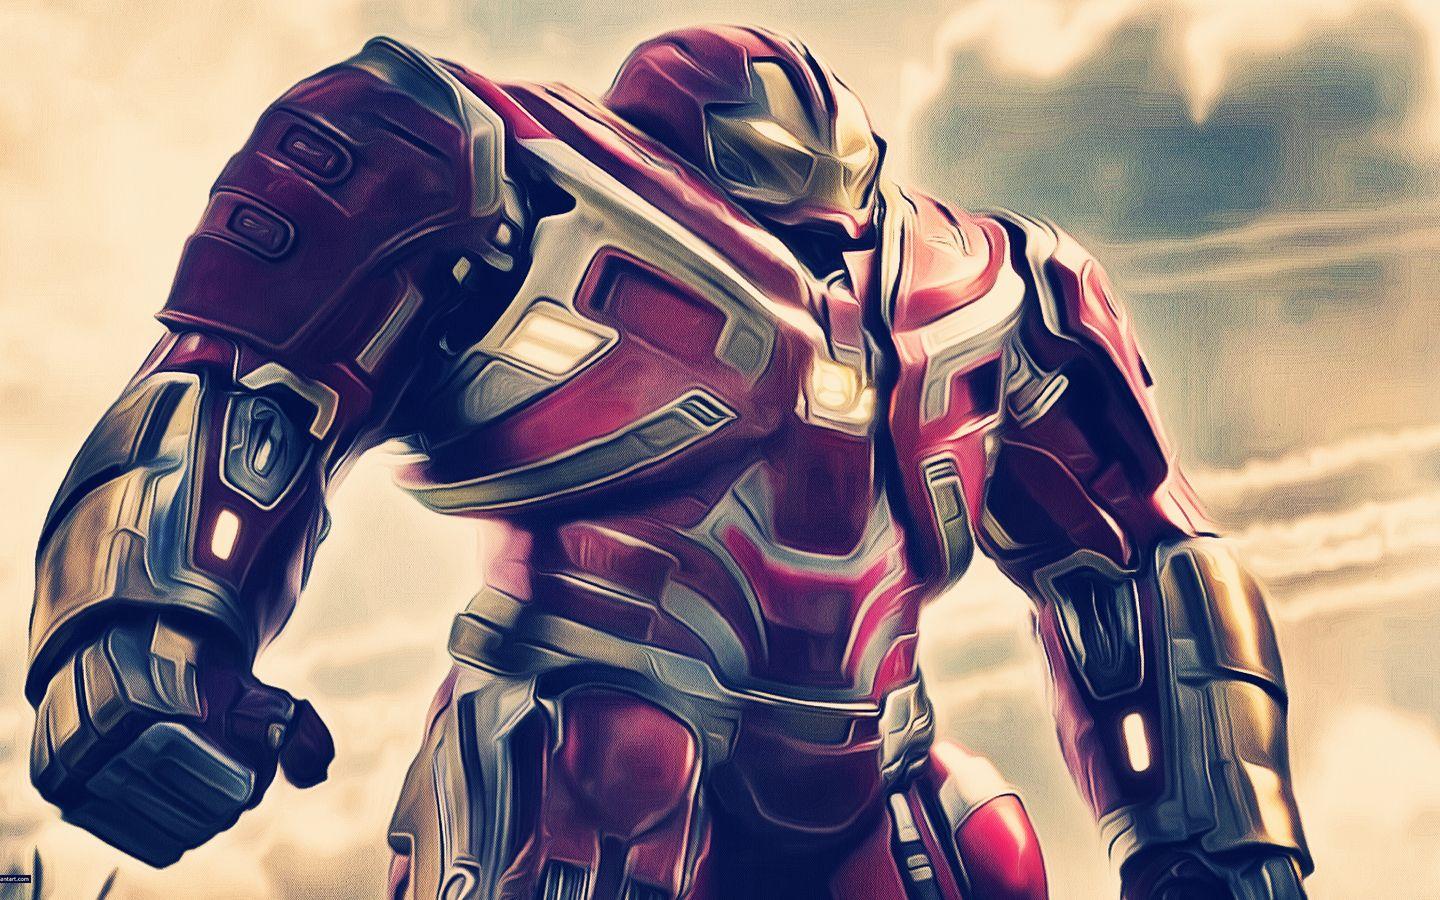 Iron Hulkbuster In Avengers Infinity War 2018 Artwork